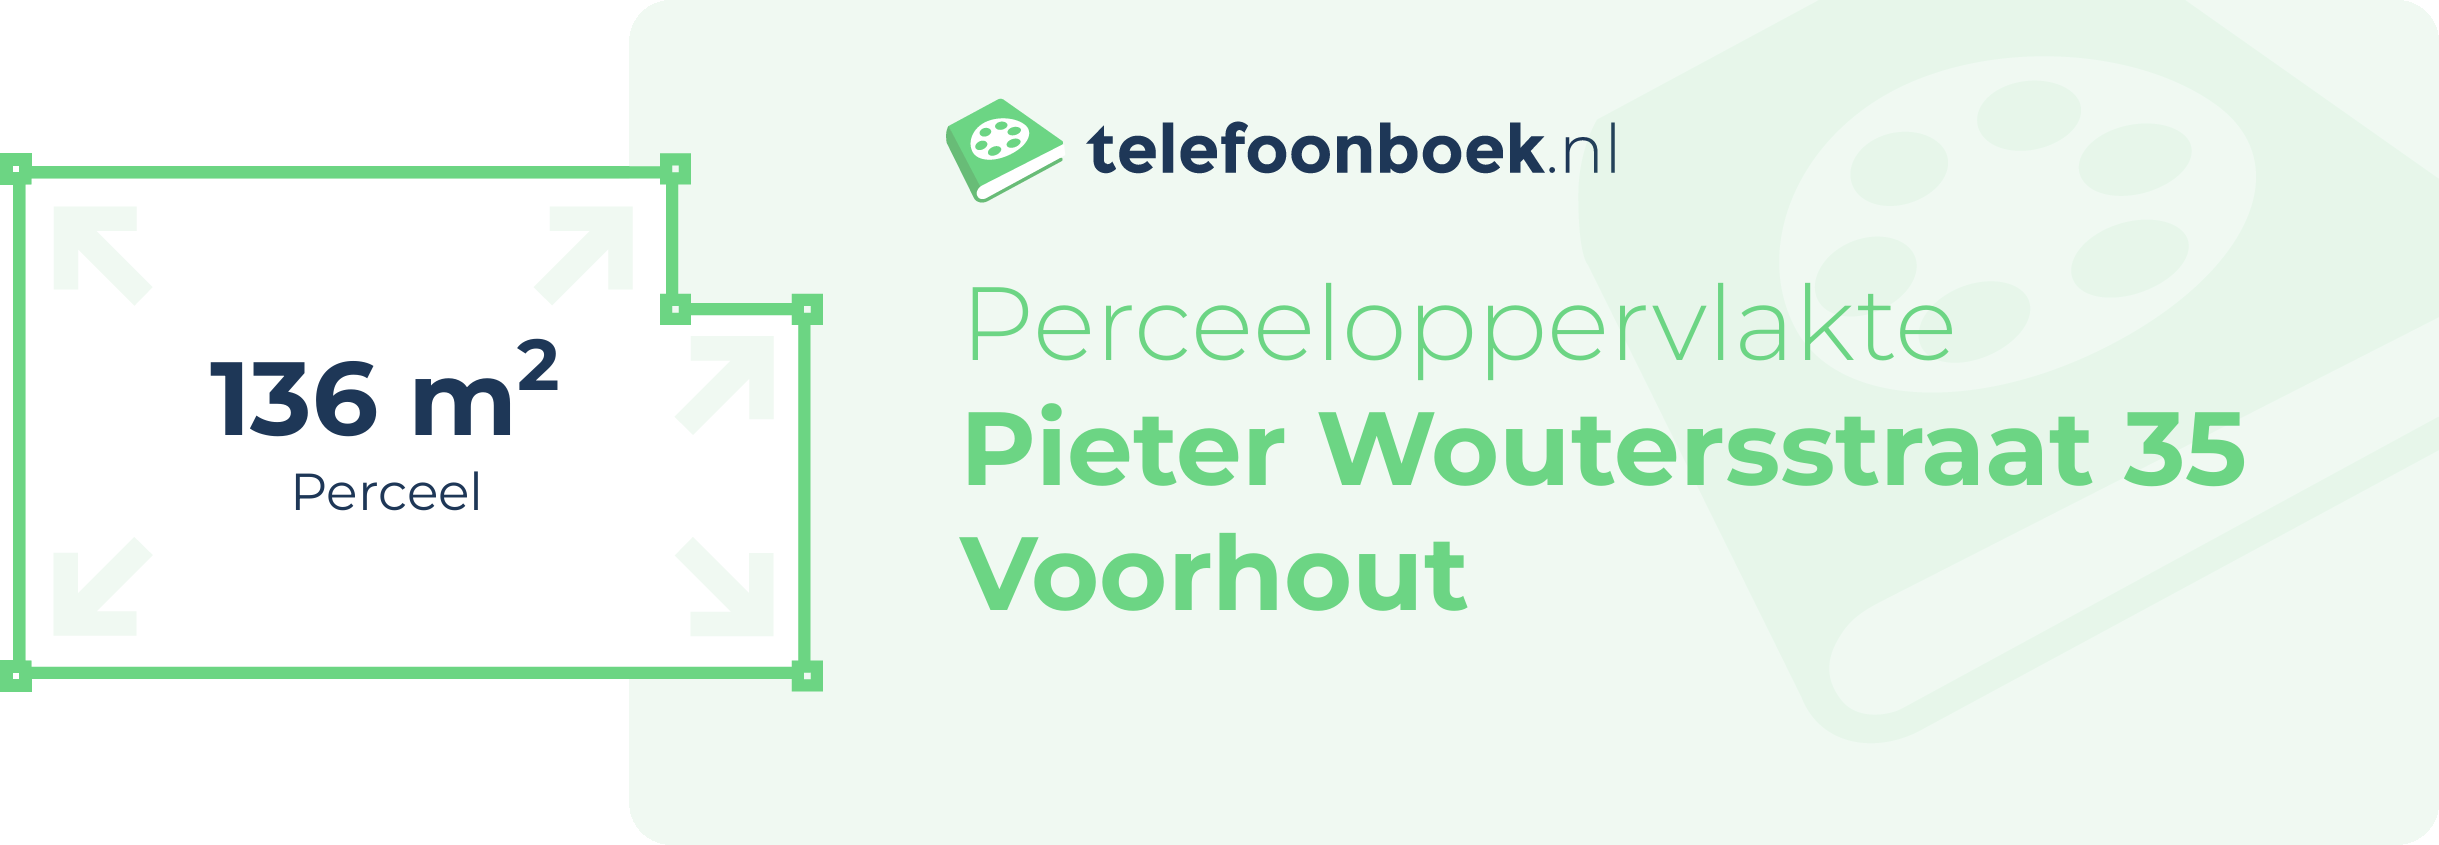 Perceeloppervlakte Pieter Woutersstraat 35 Voorhout